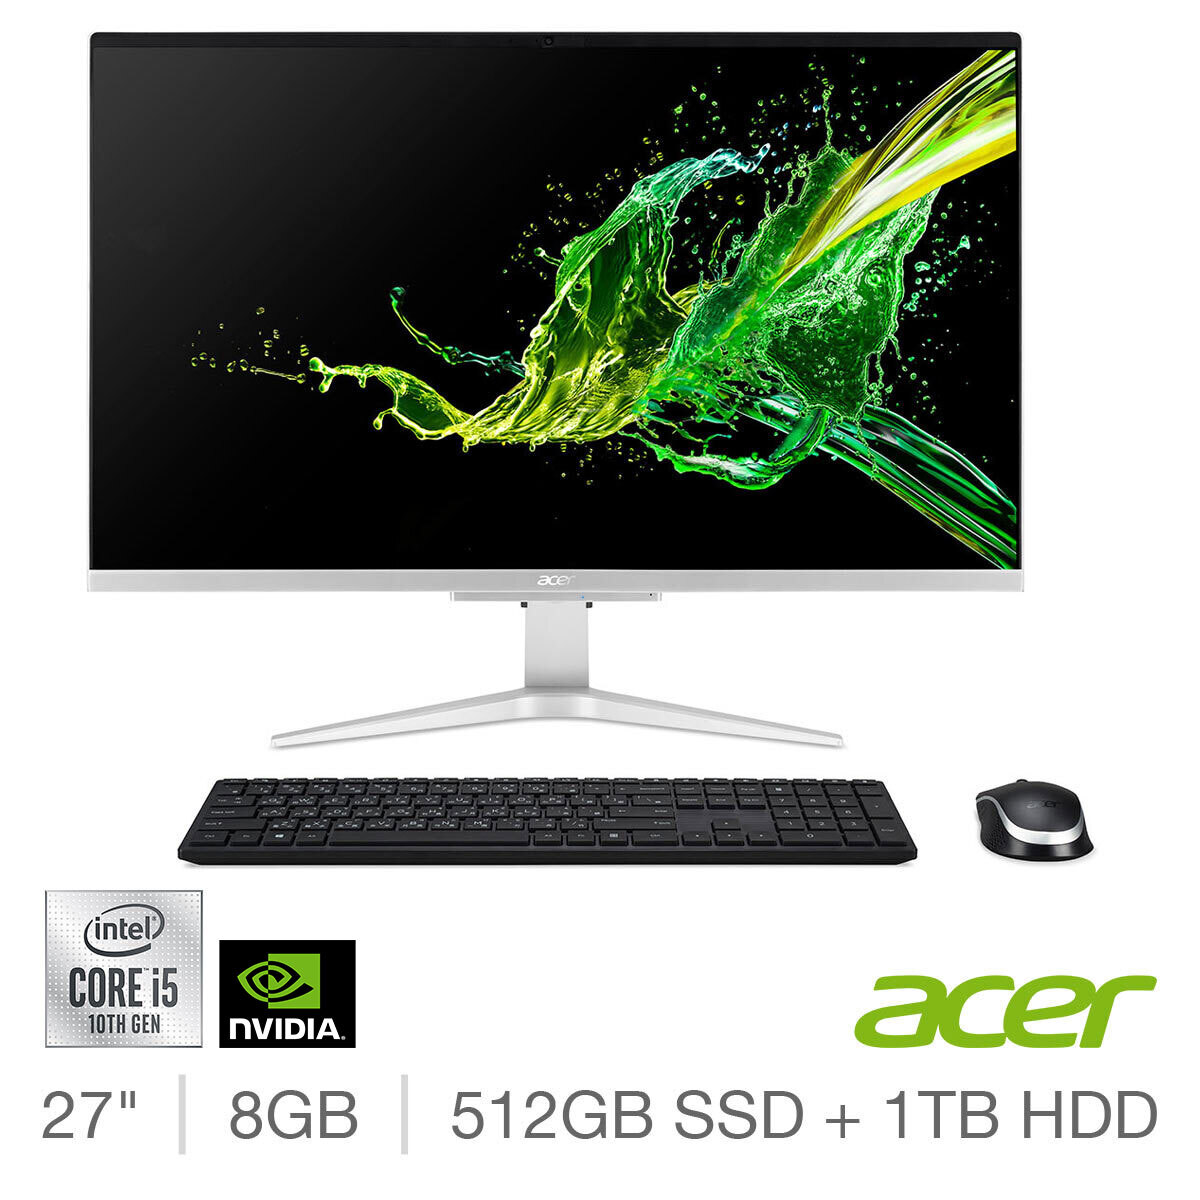 Acer Aspire C27, Intel Core i5, 8GB RAM, 512GB SSD + 1TB HDD, NVIDIA GeForce MX130, 27 Inch, All in One Desktop PC, DQ.BDPEK.00A